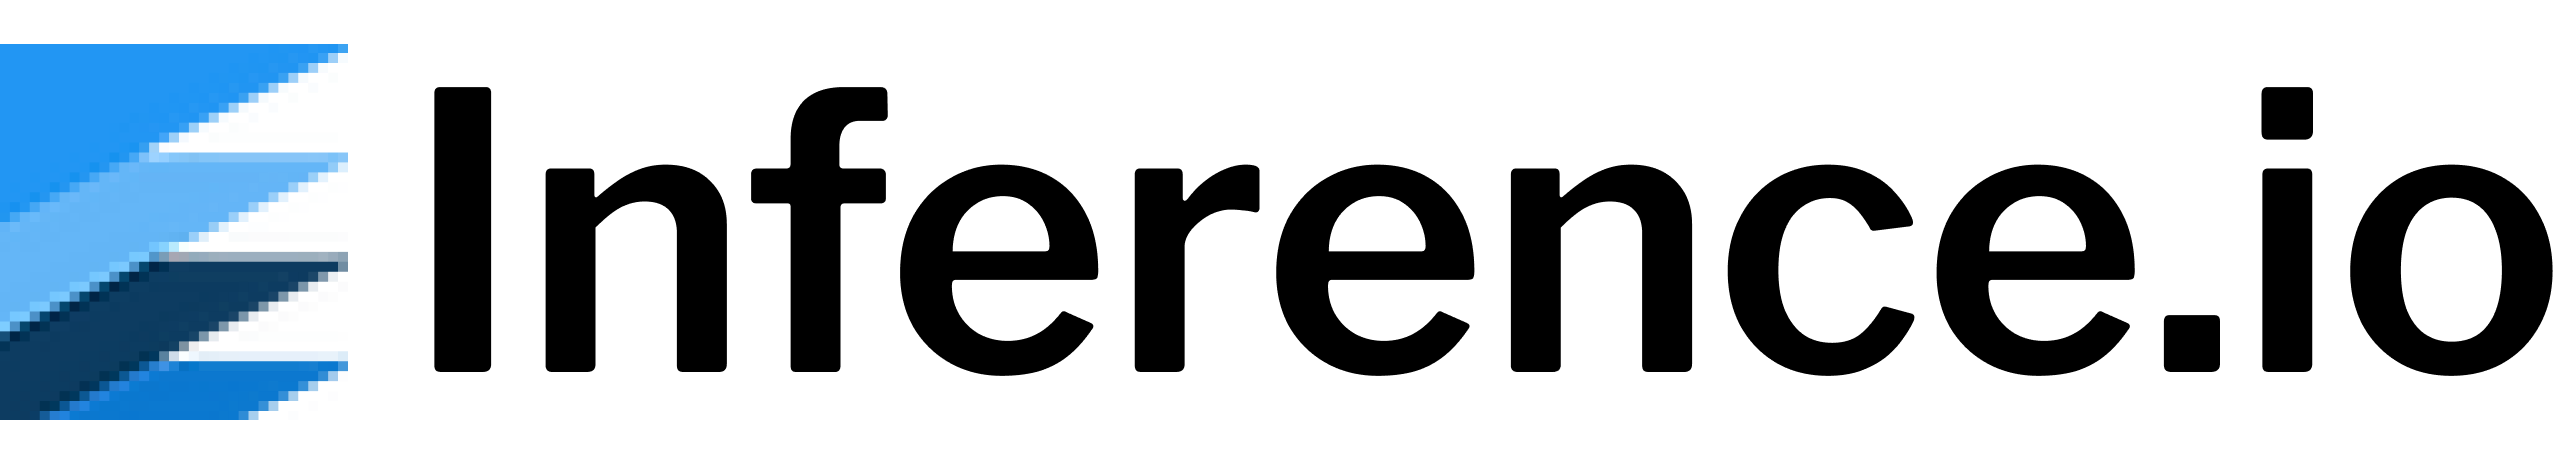 inferencs-logo